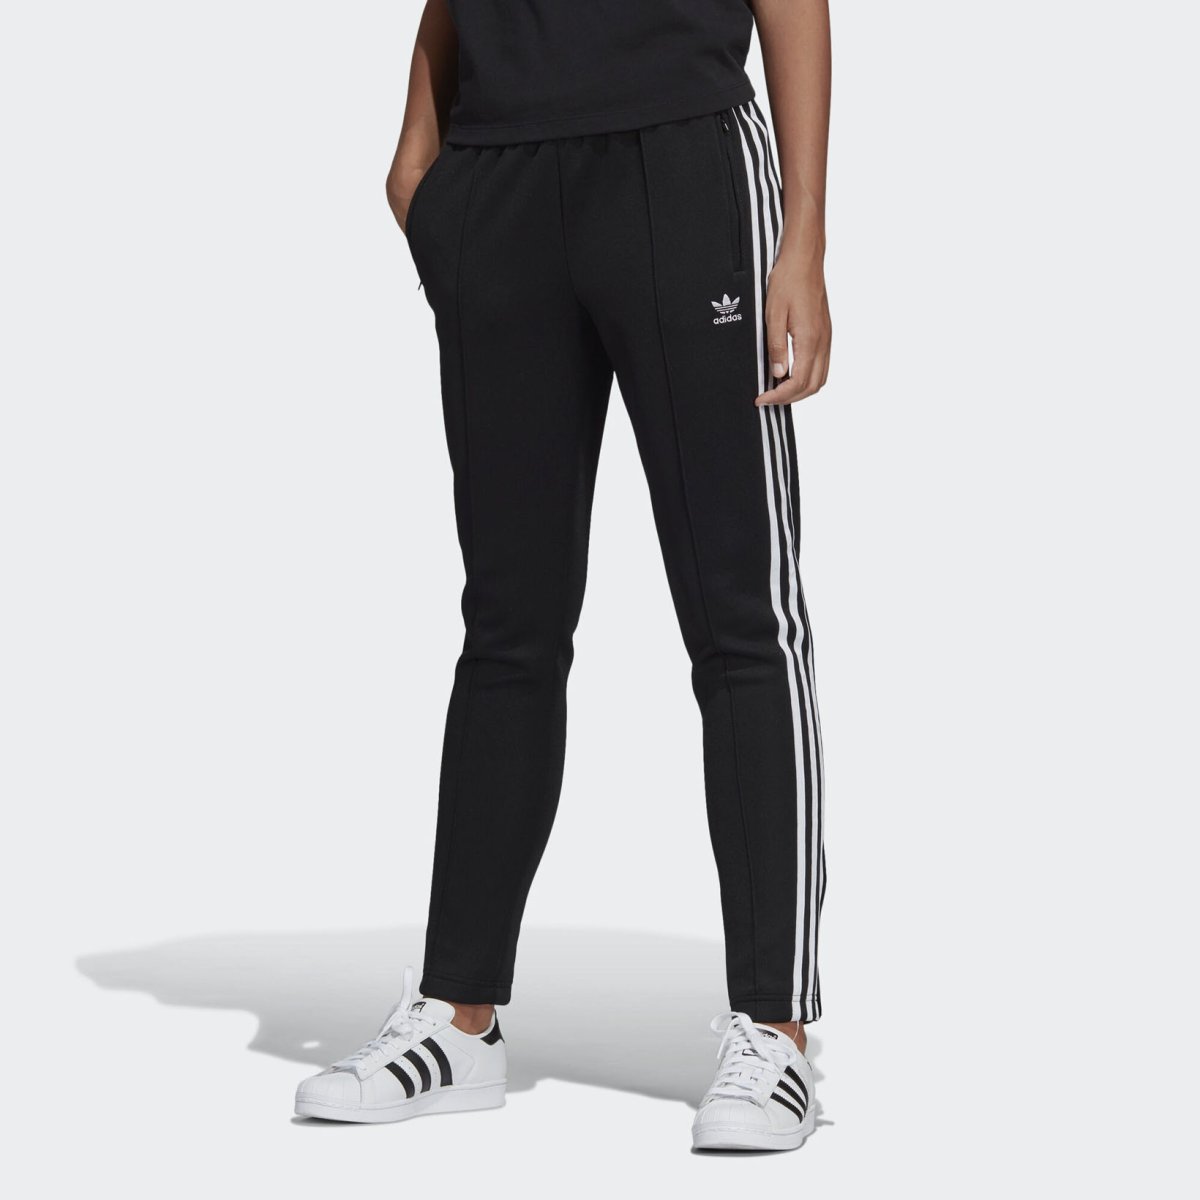 Adidas Originals SST штаны